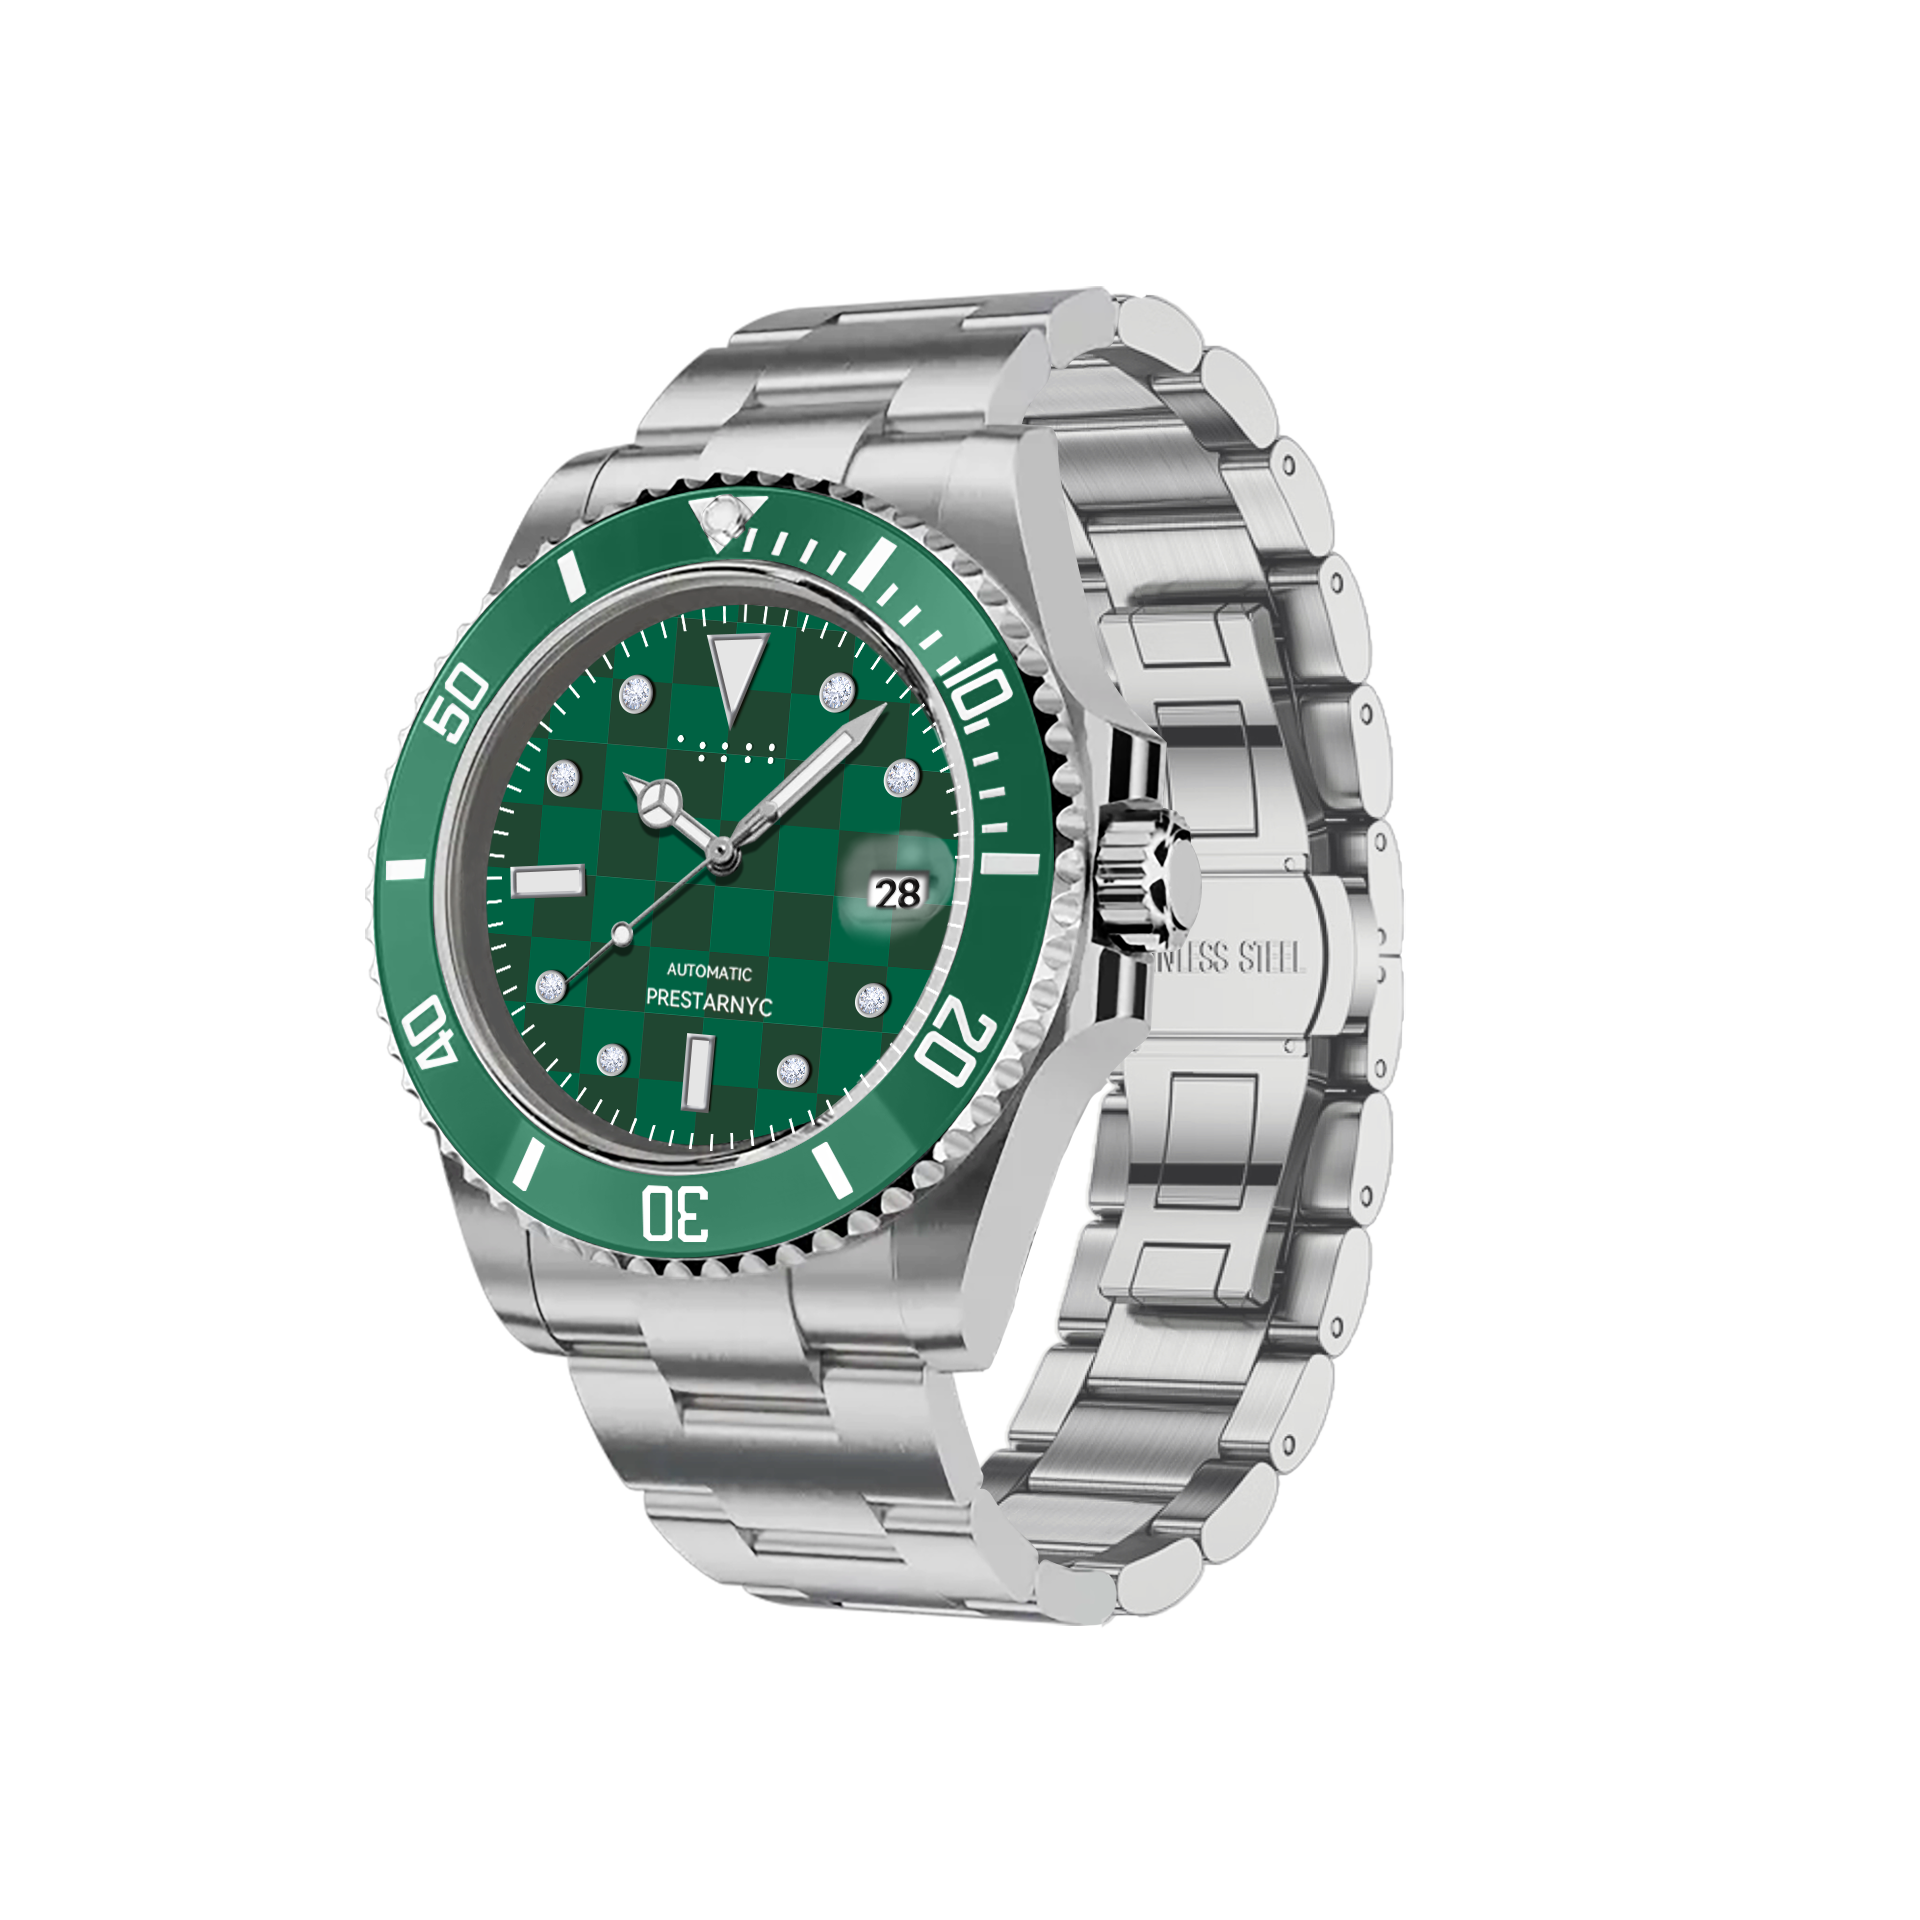 Prestar NYC Aquaman Classic Chequered Gemstone Watch (Double Green)